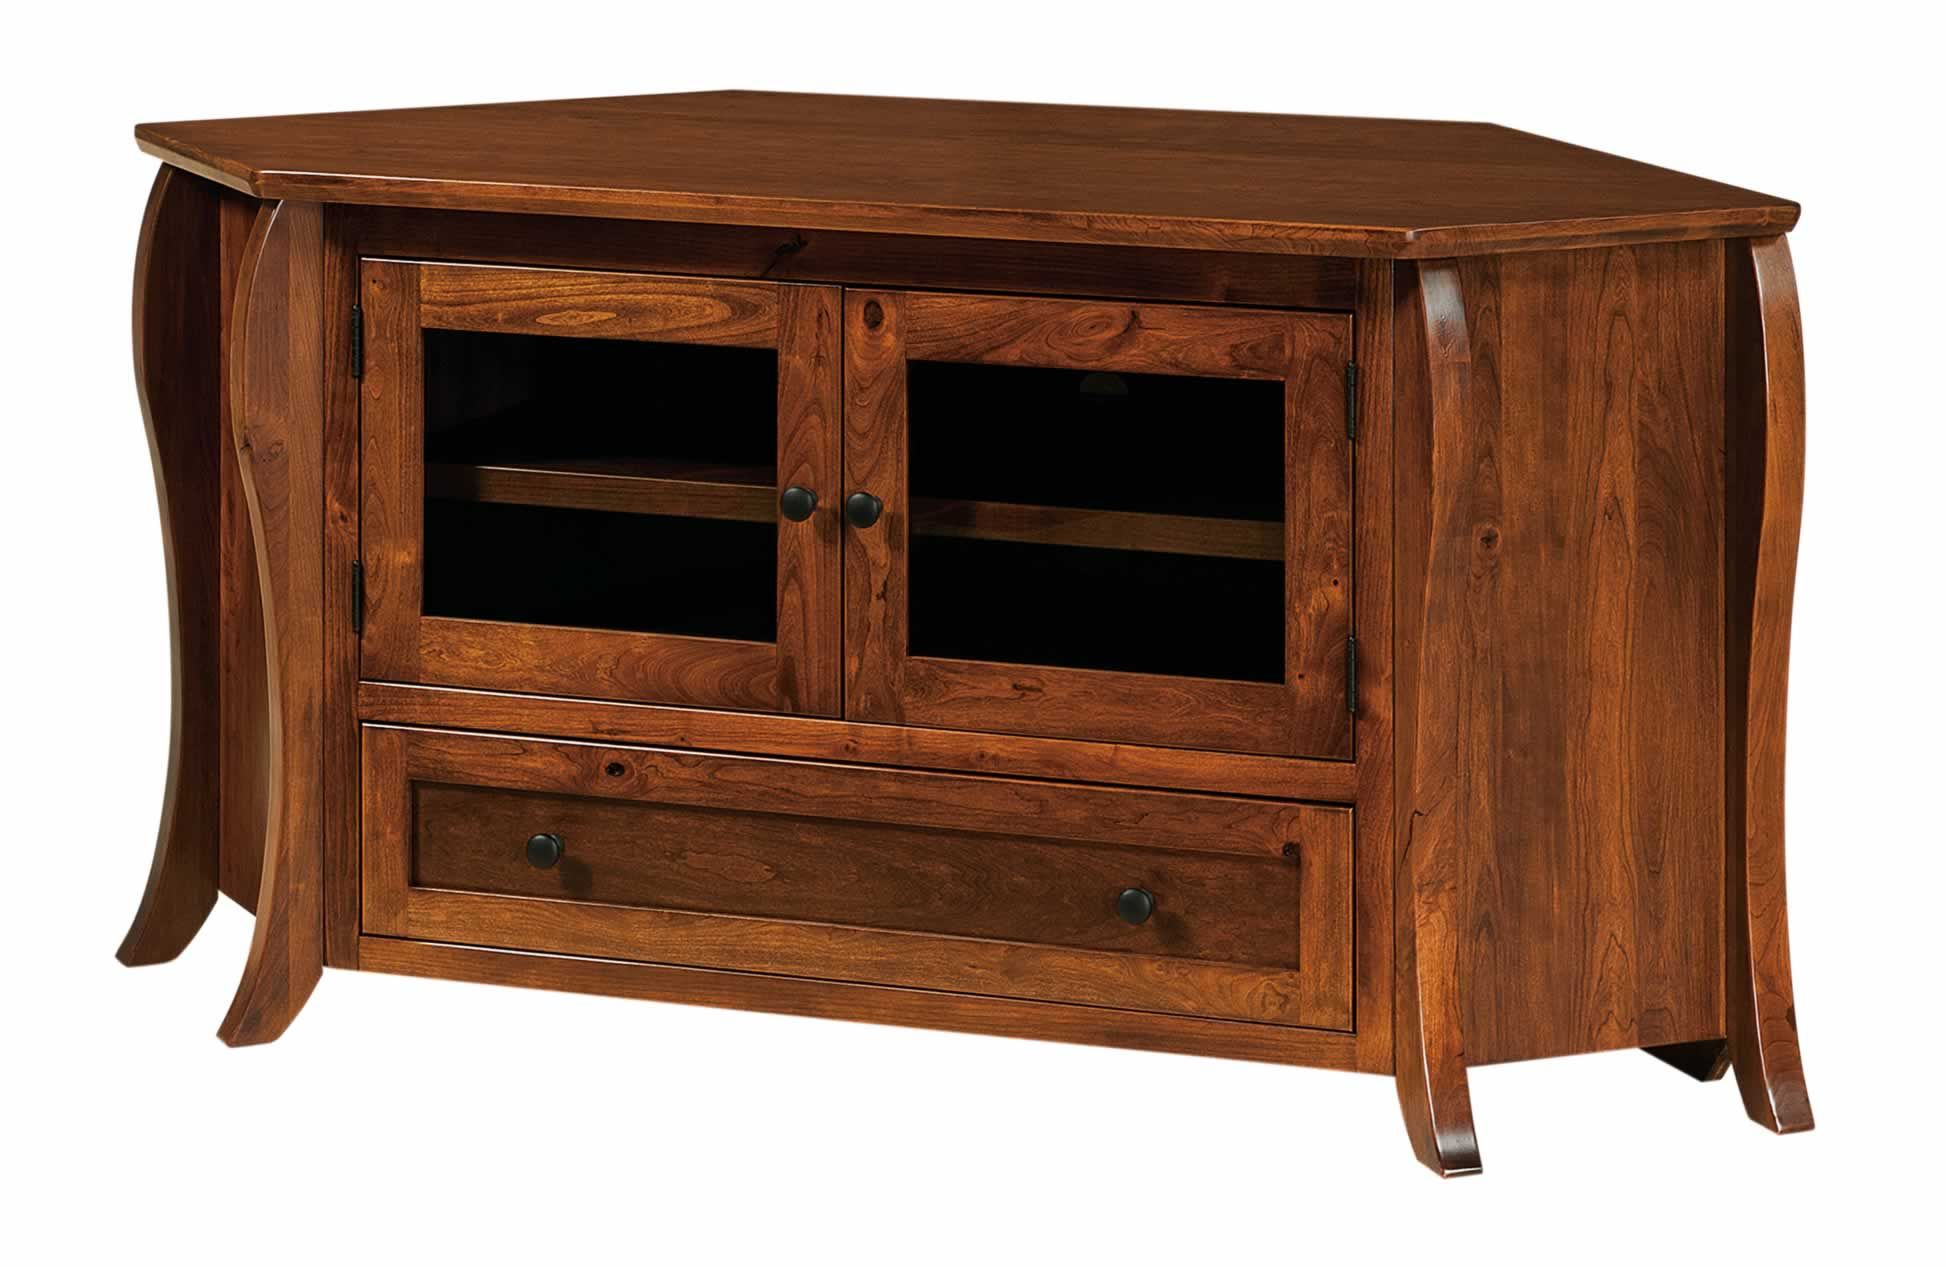 Flat Screen Tv Corner Cabinet – Heartland Amish Furniture With Regard To Flat Screen Tv Stands Corner Units (View 12 of 15)